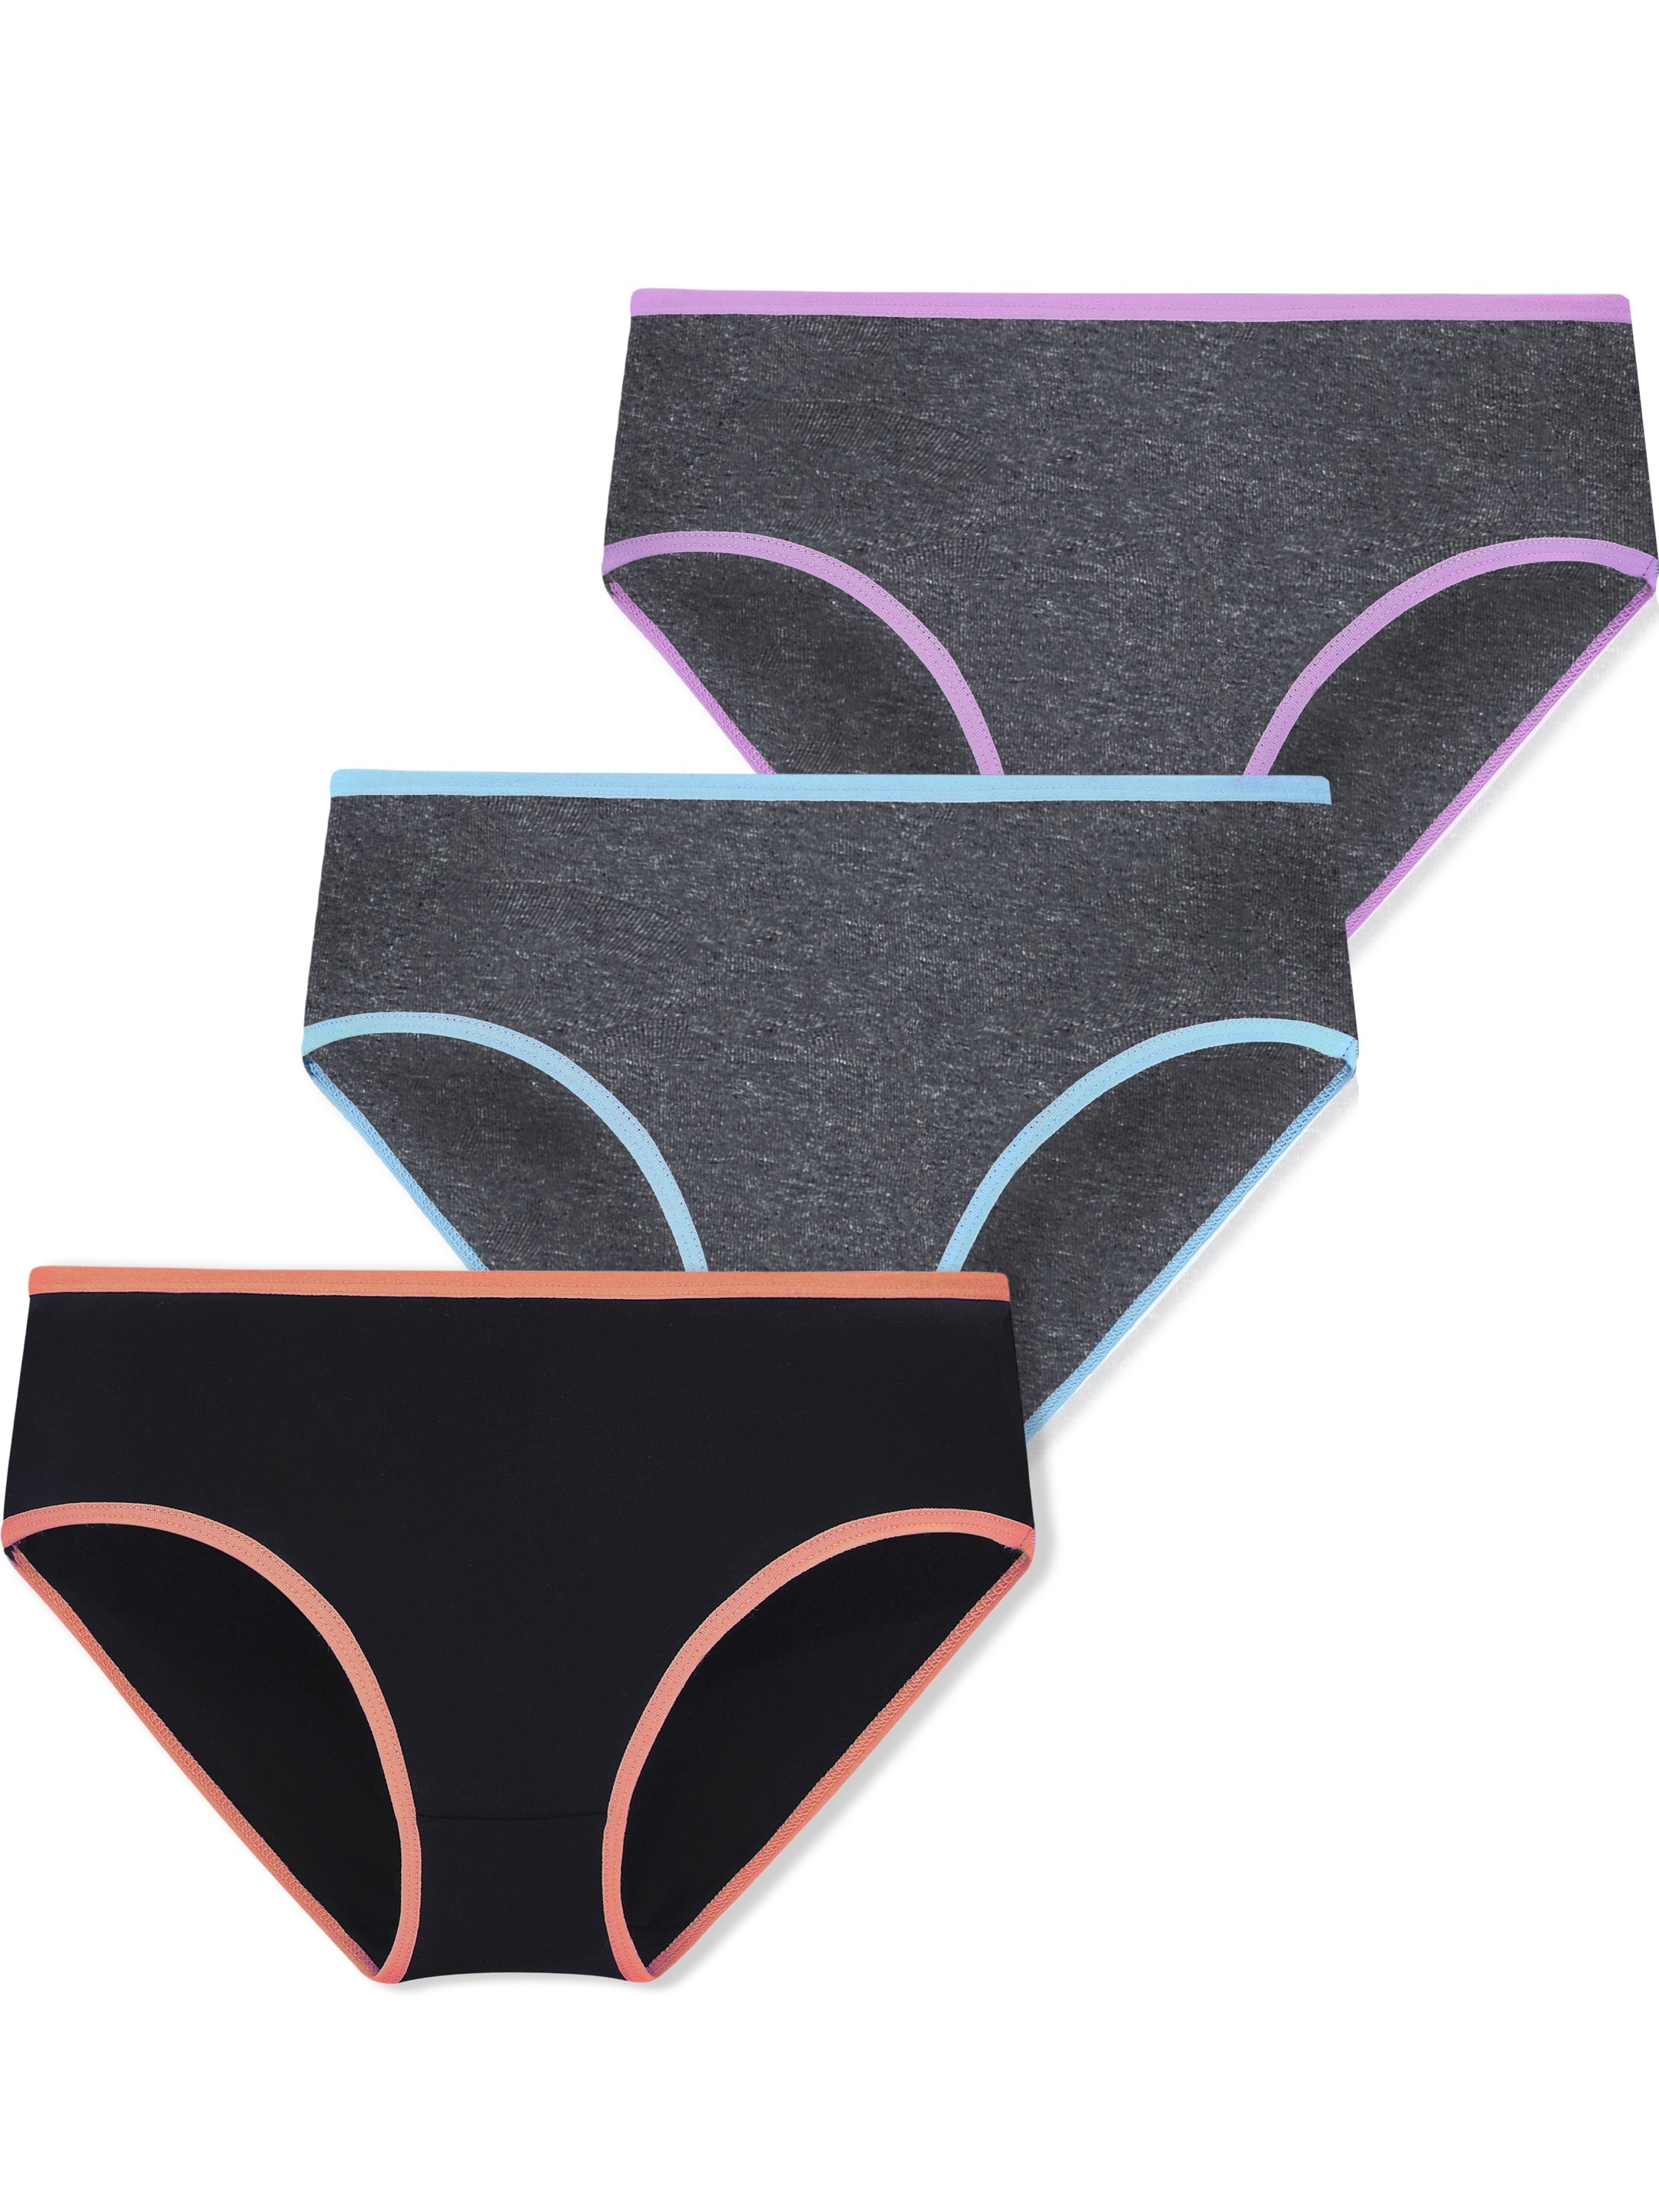 Women's Cotton Underwear Soft Breathable Brieg Ladies Panties